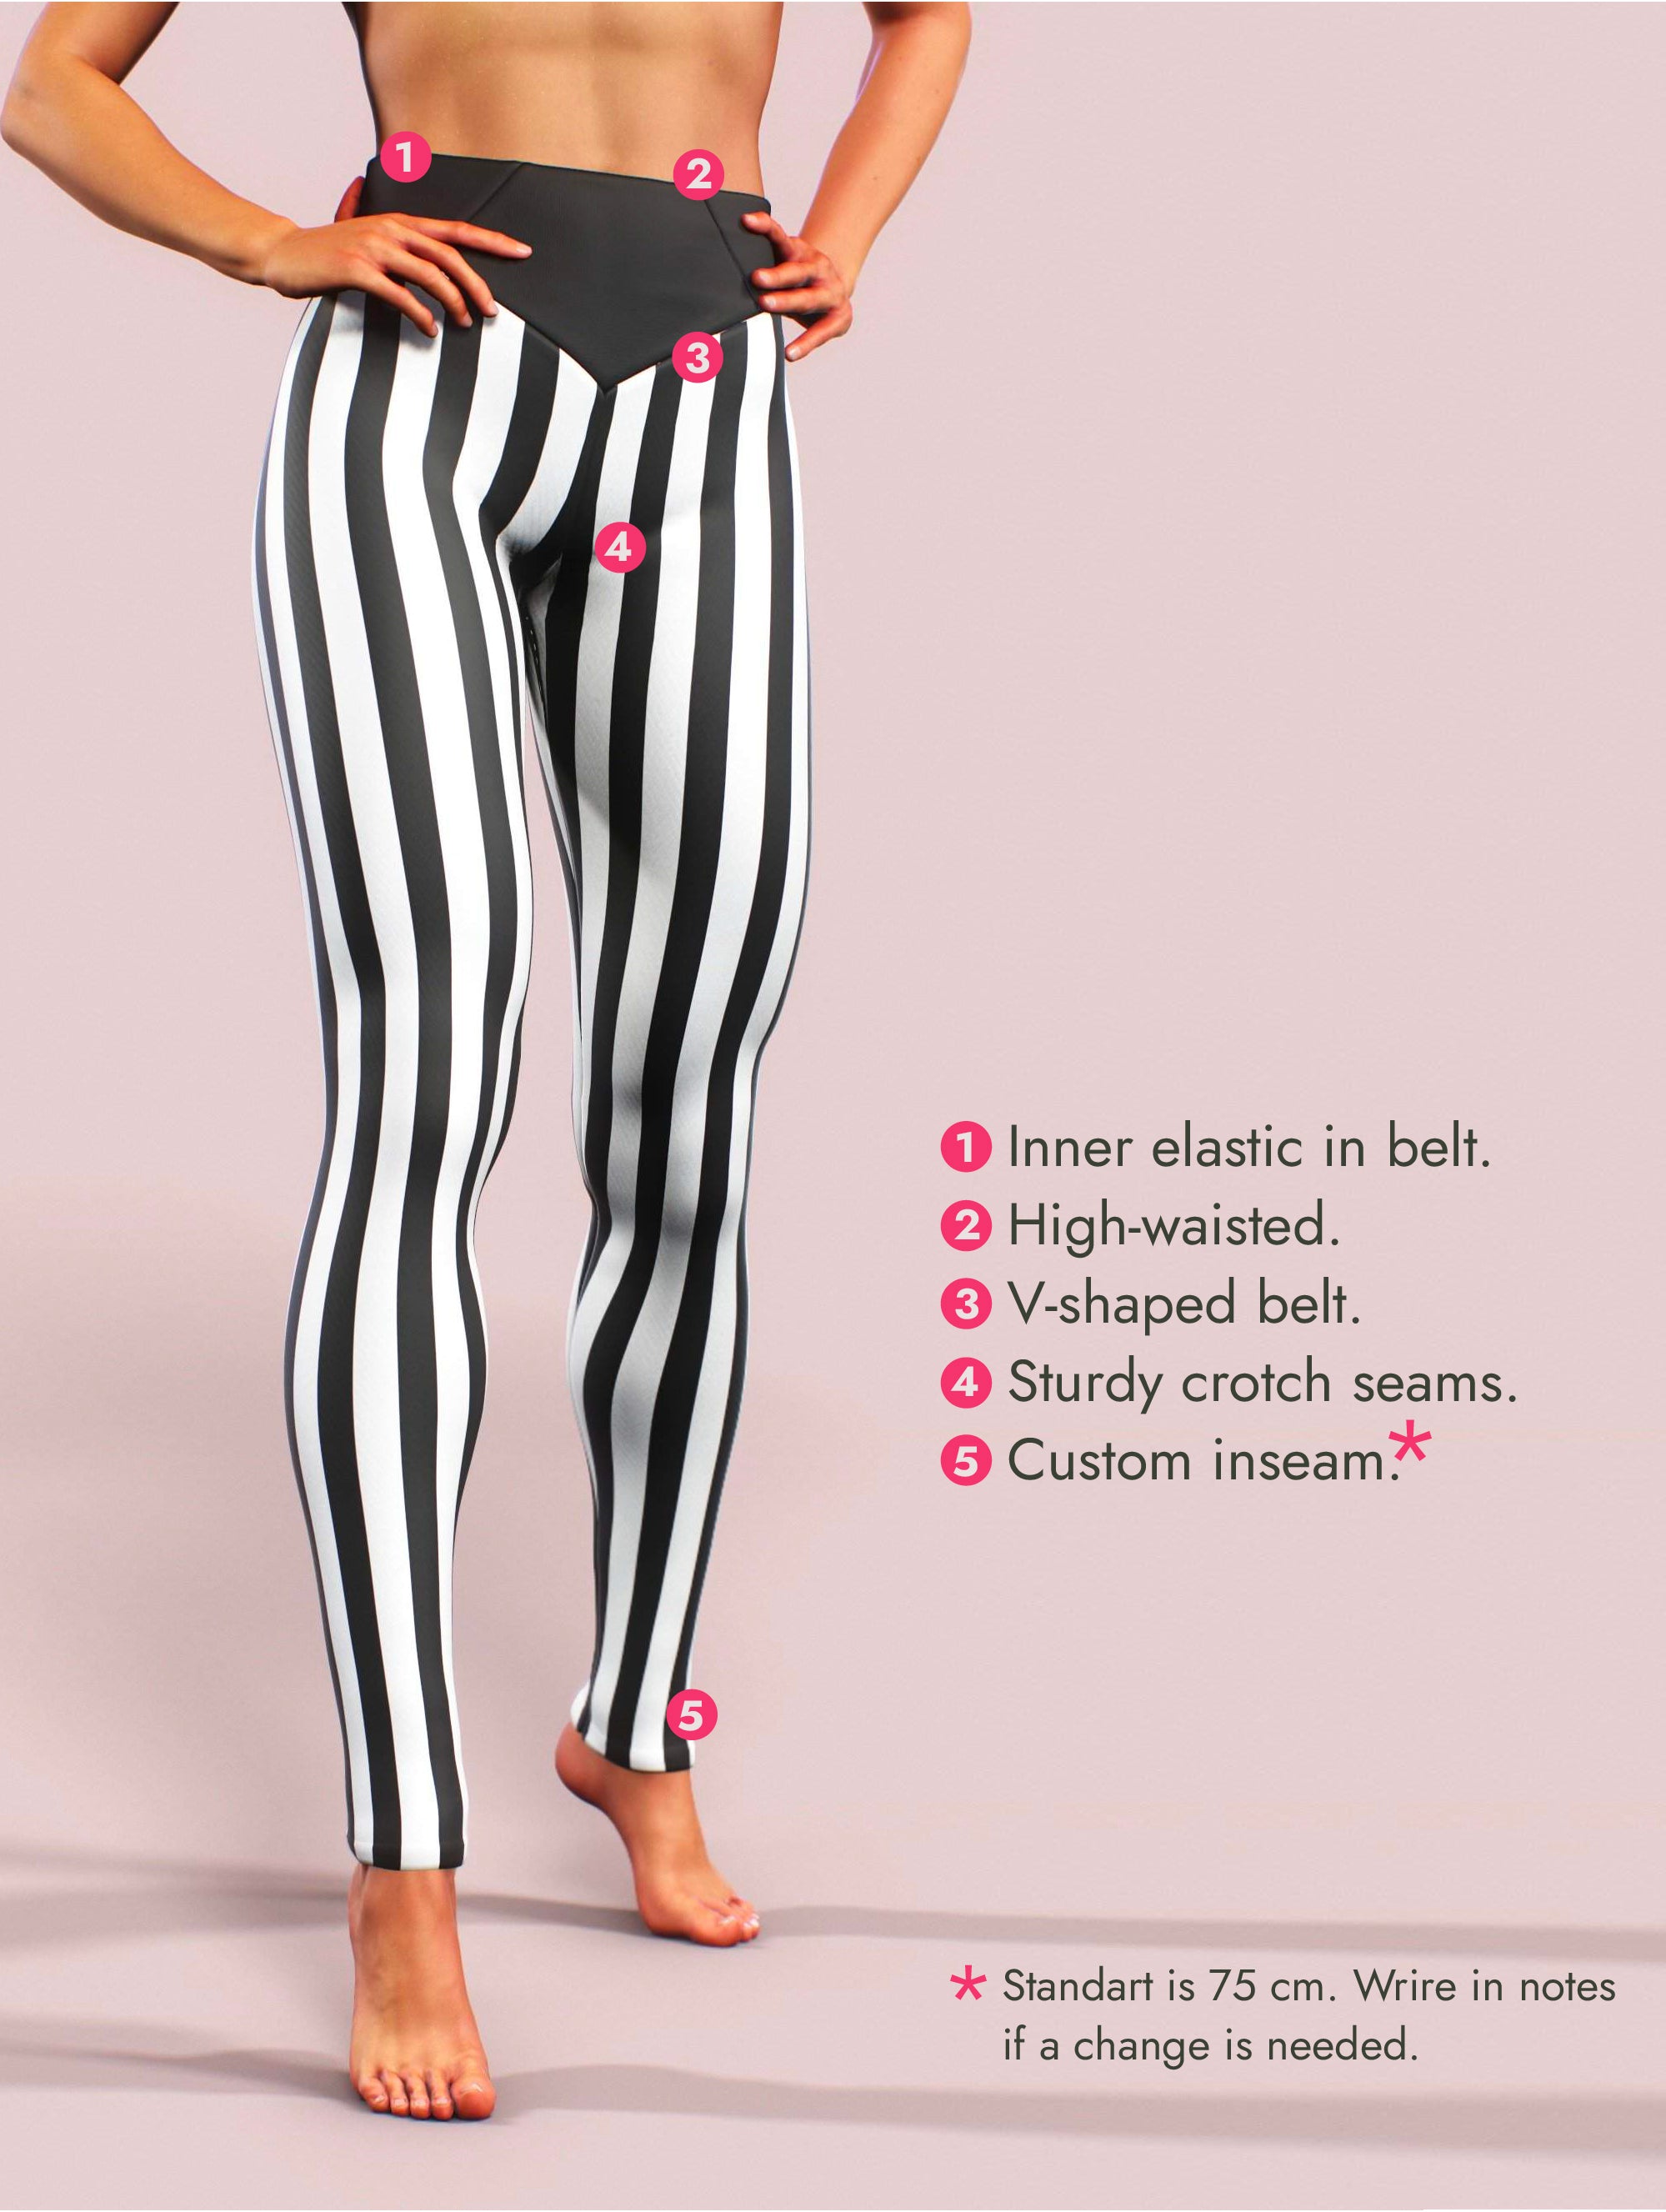 Halloween Vampire Black Red Striped Leggings Woman Cosplay Yoga Pants  Running Activewear Gift - Etsy